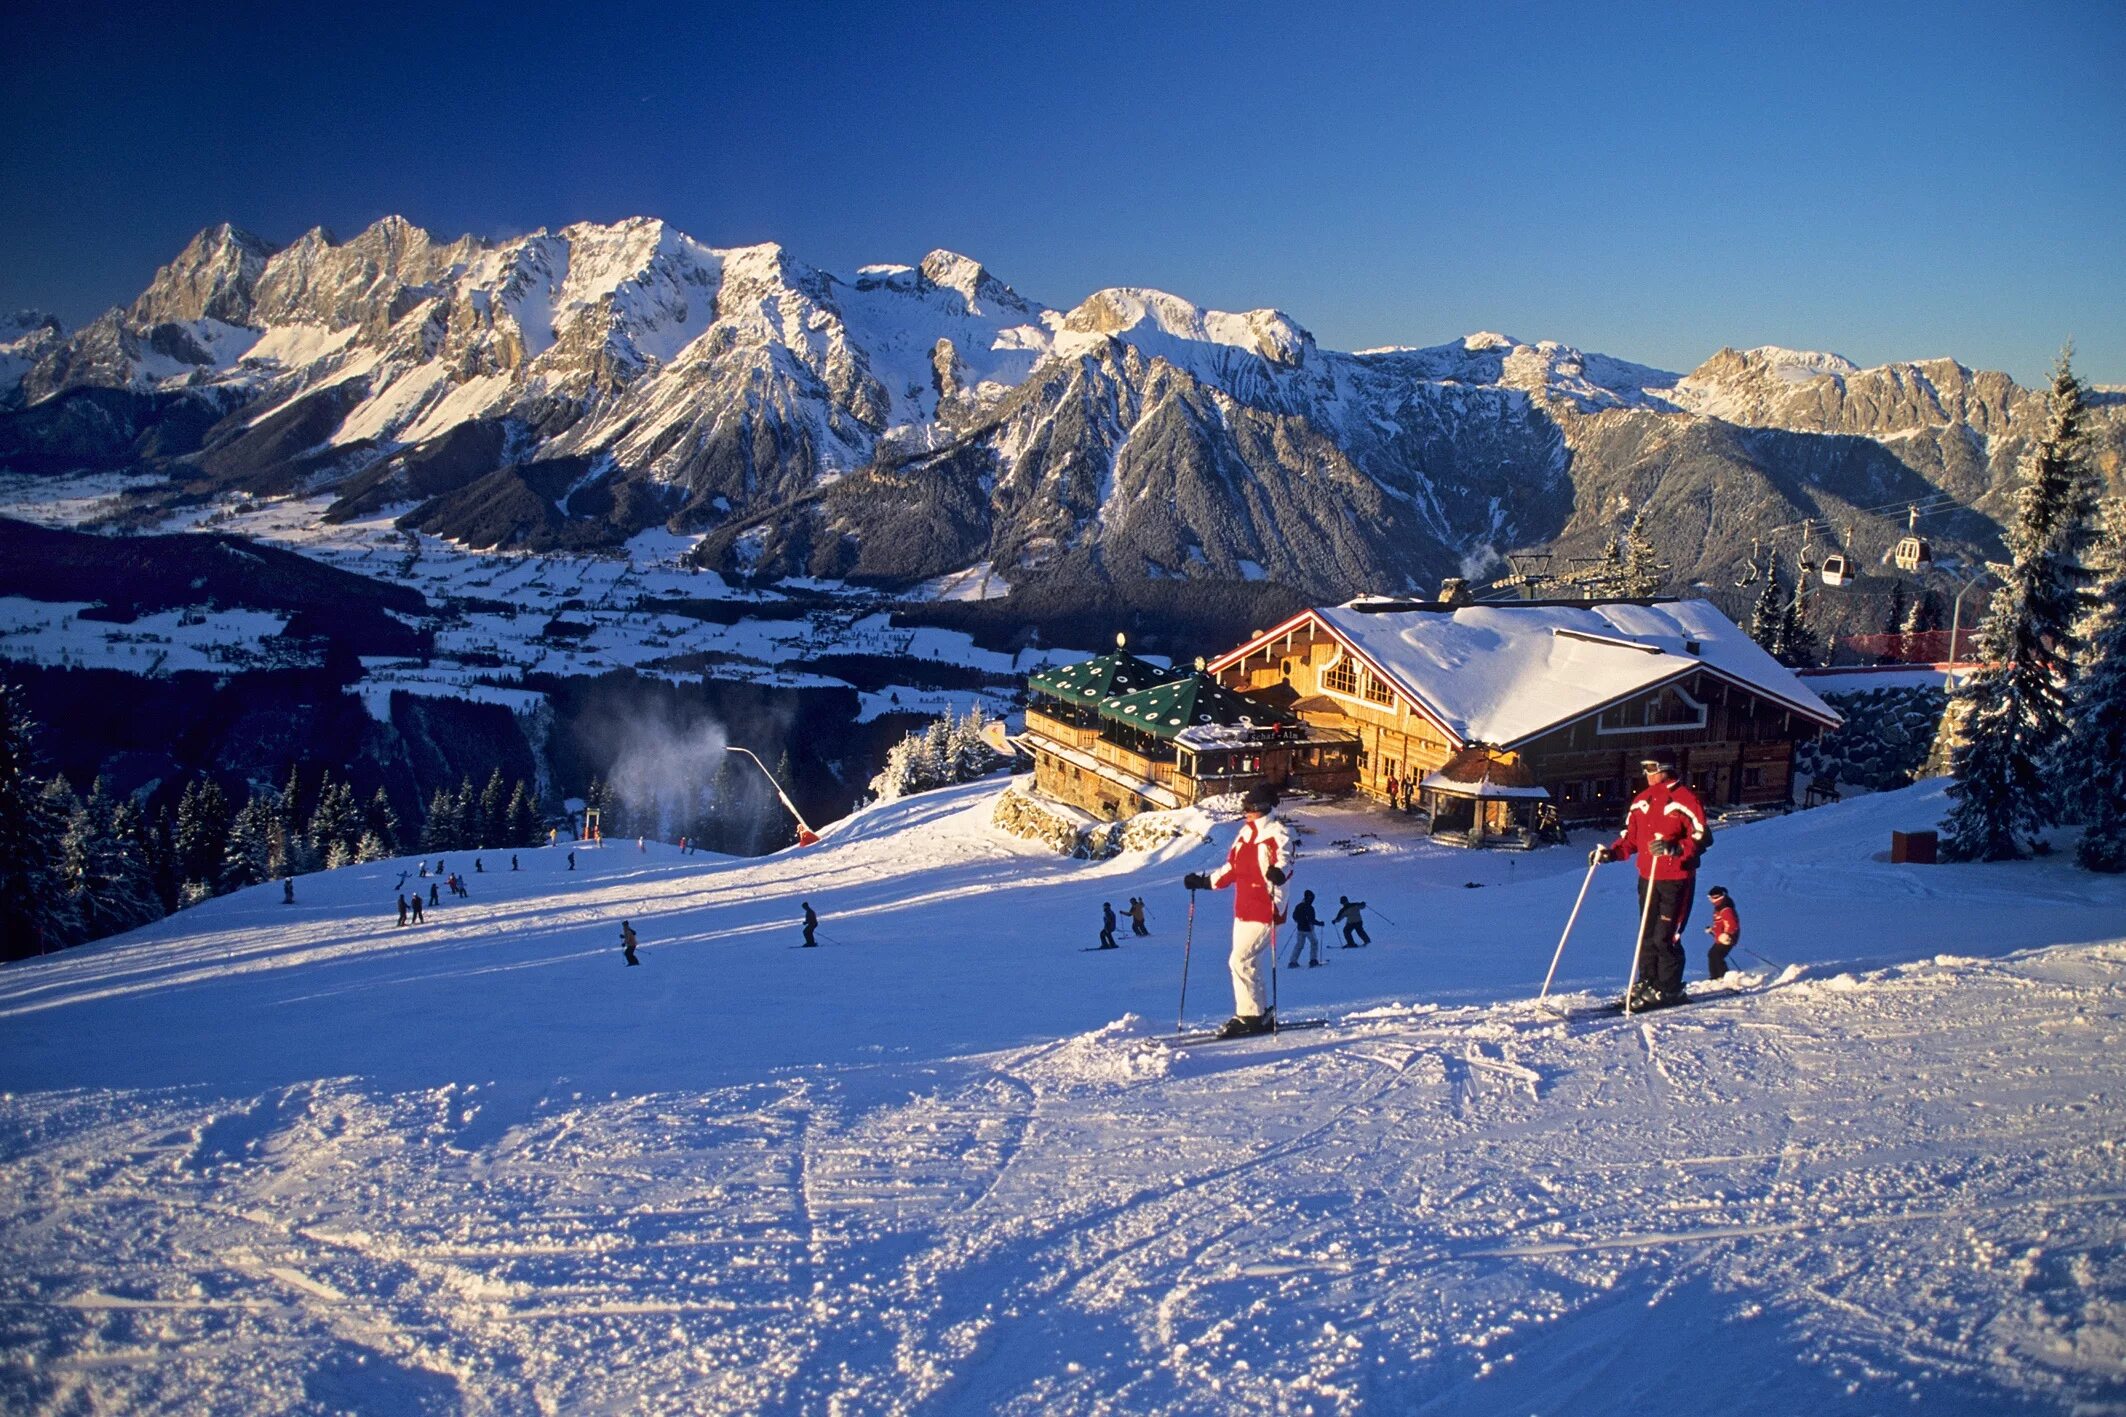 Шладминг Австрия горнолыжный курорт. Китцбюэль горнолыжный курорт. Австрия Альпы горнолыжные курорты. Шладминг Штирия. Горнолыжки где